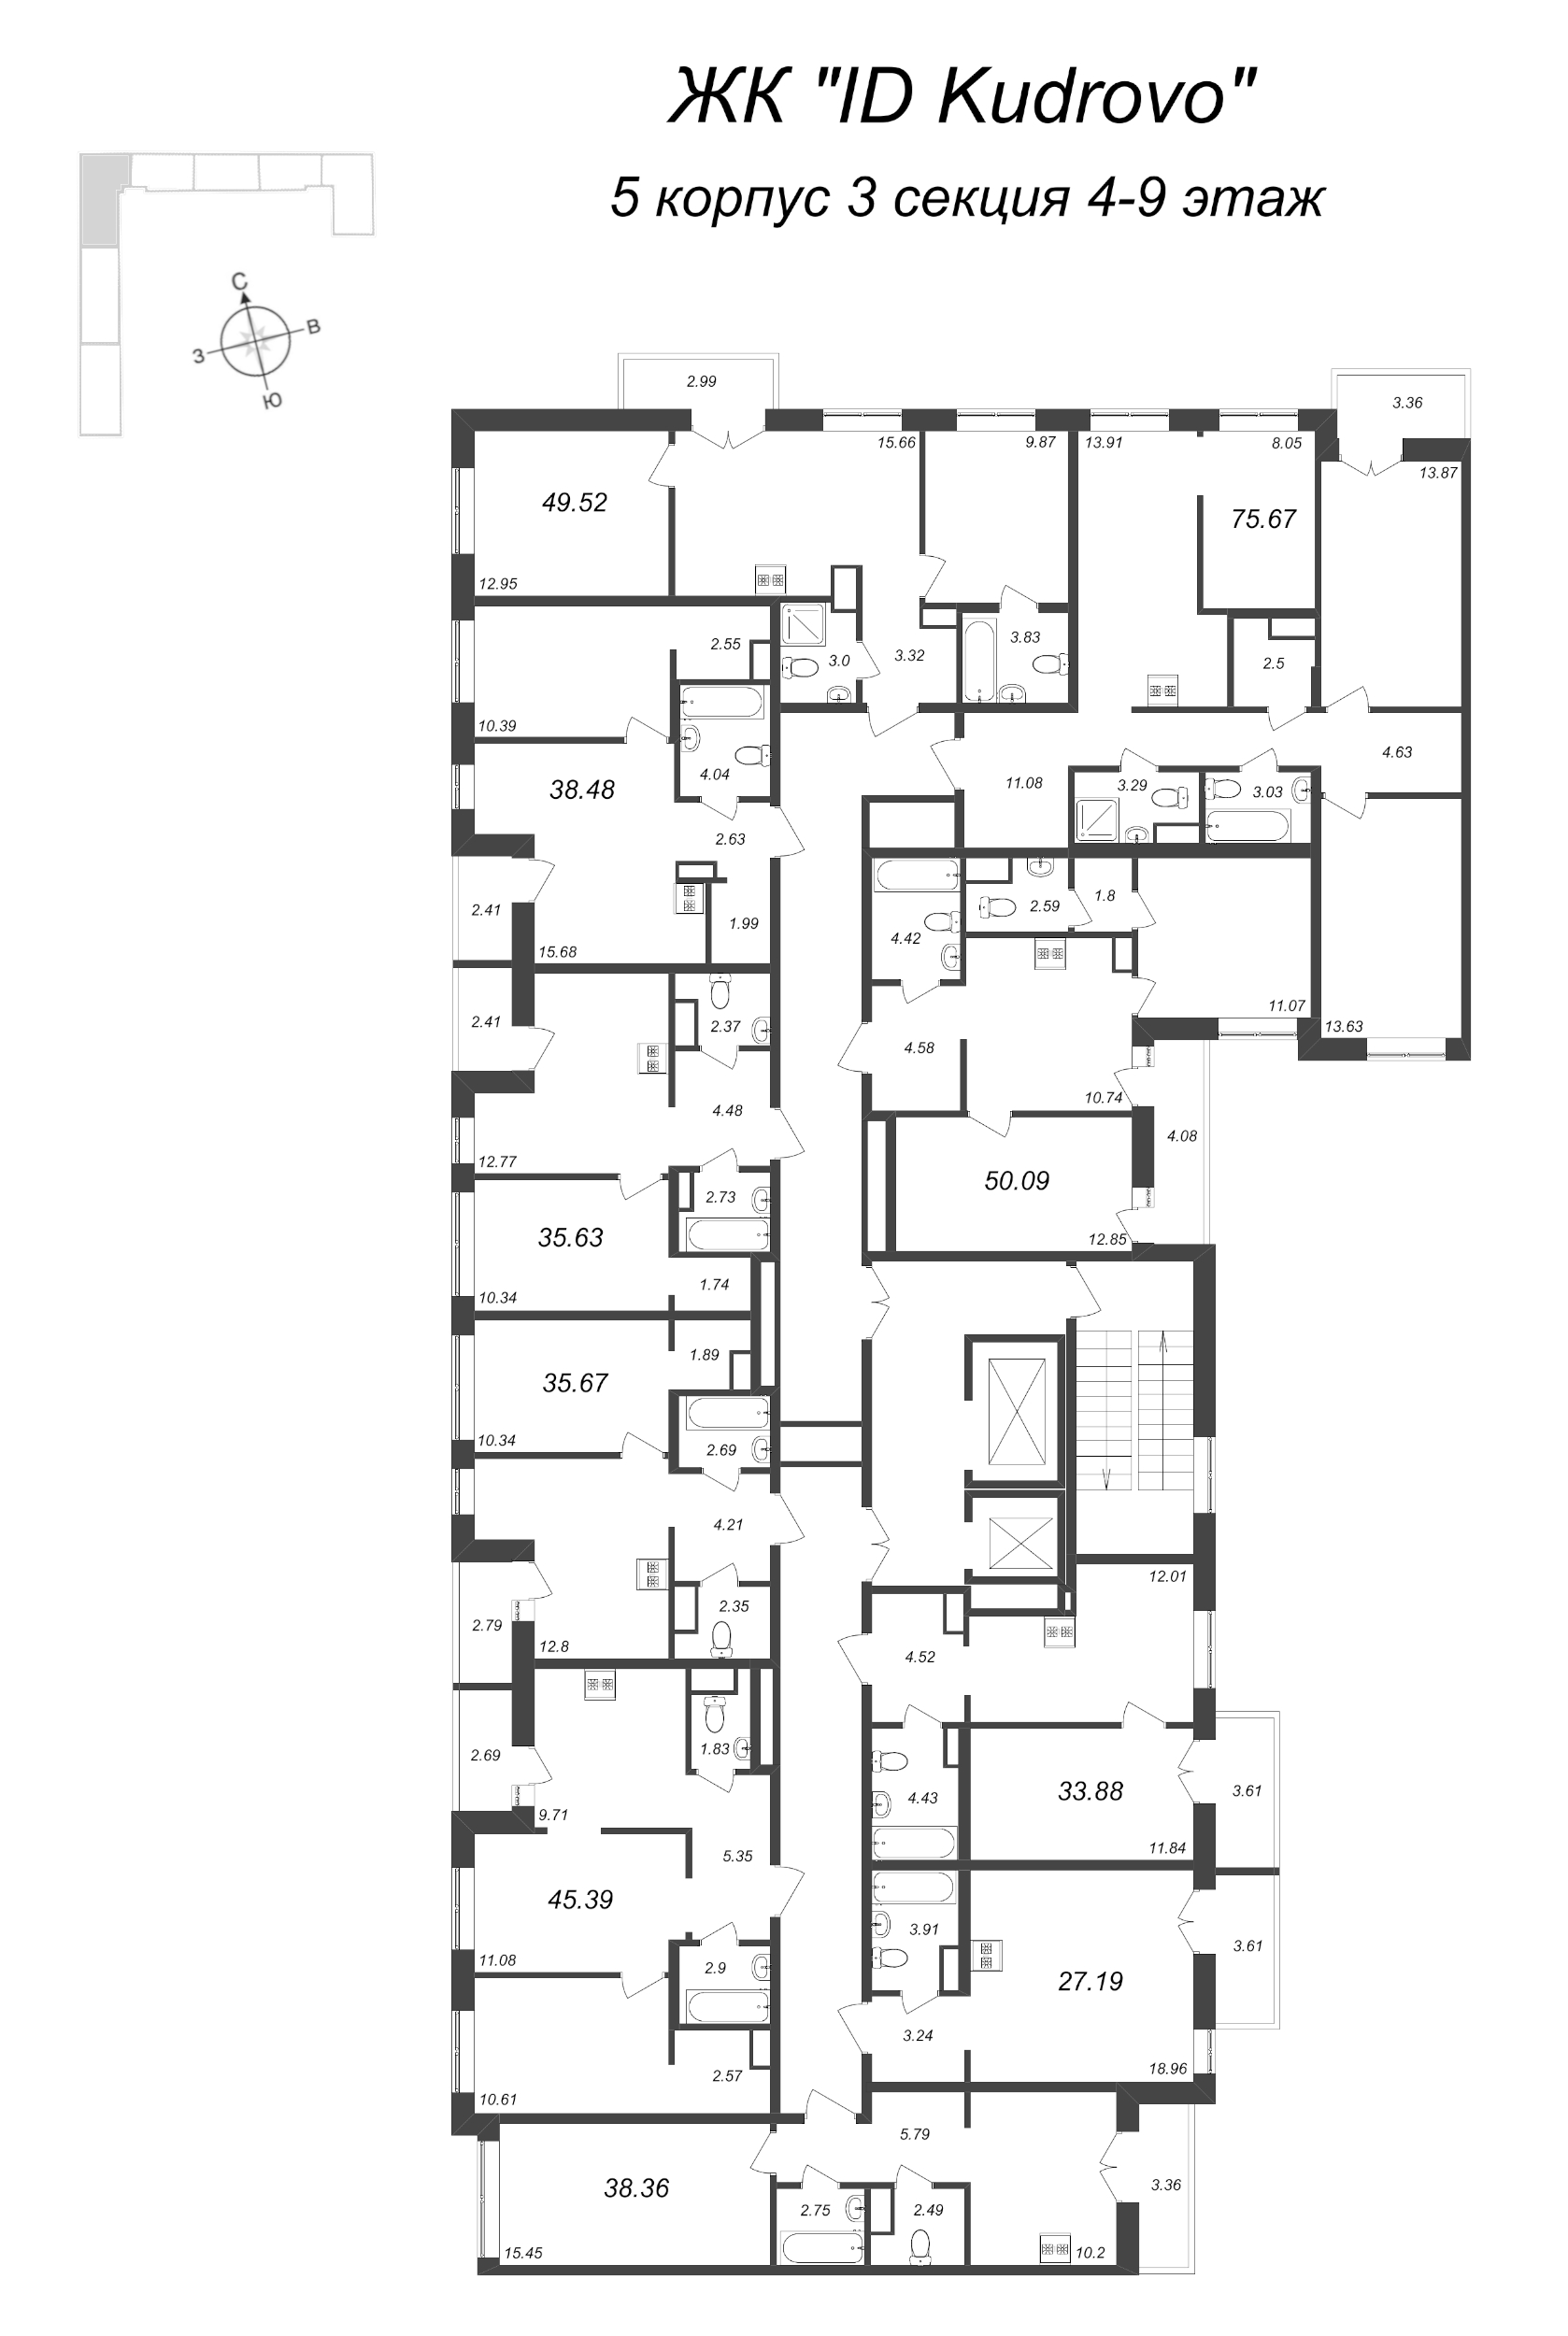 2-комнатная (Евро) квартира, 38.48 м² в ЖК "ID Kudrovo" - планировка этажа